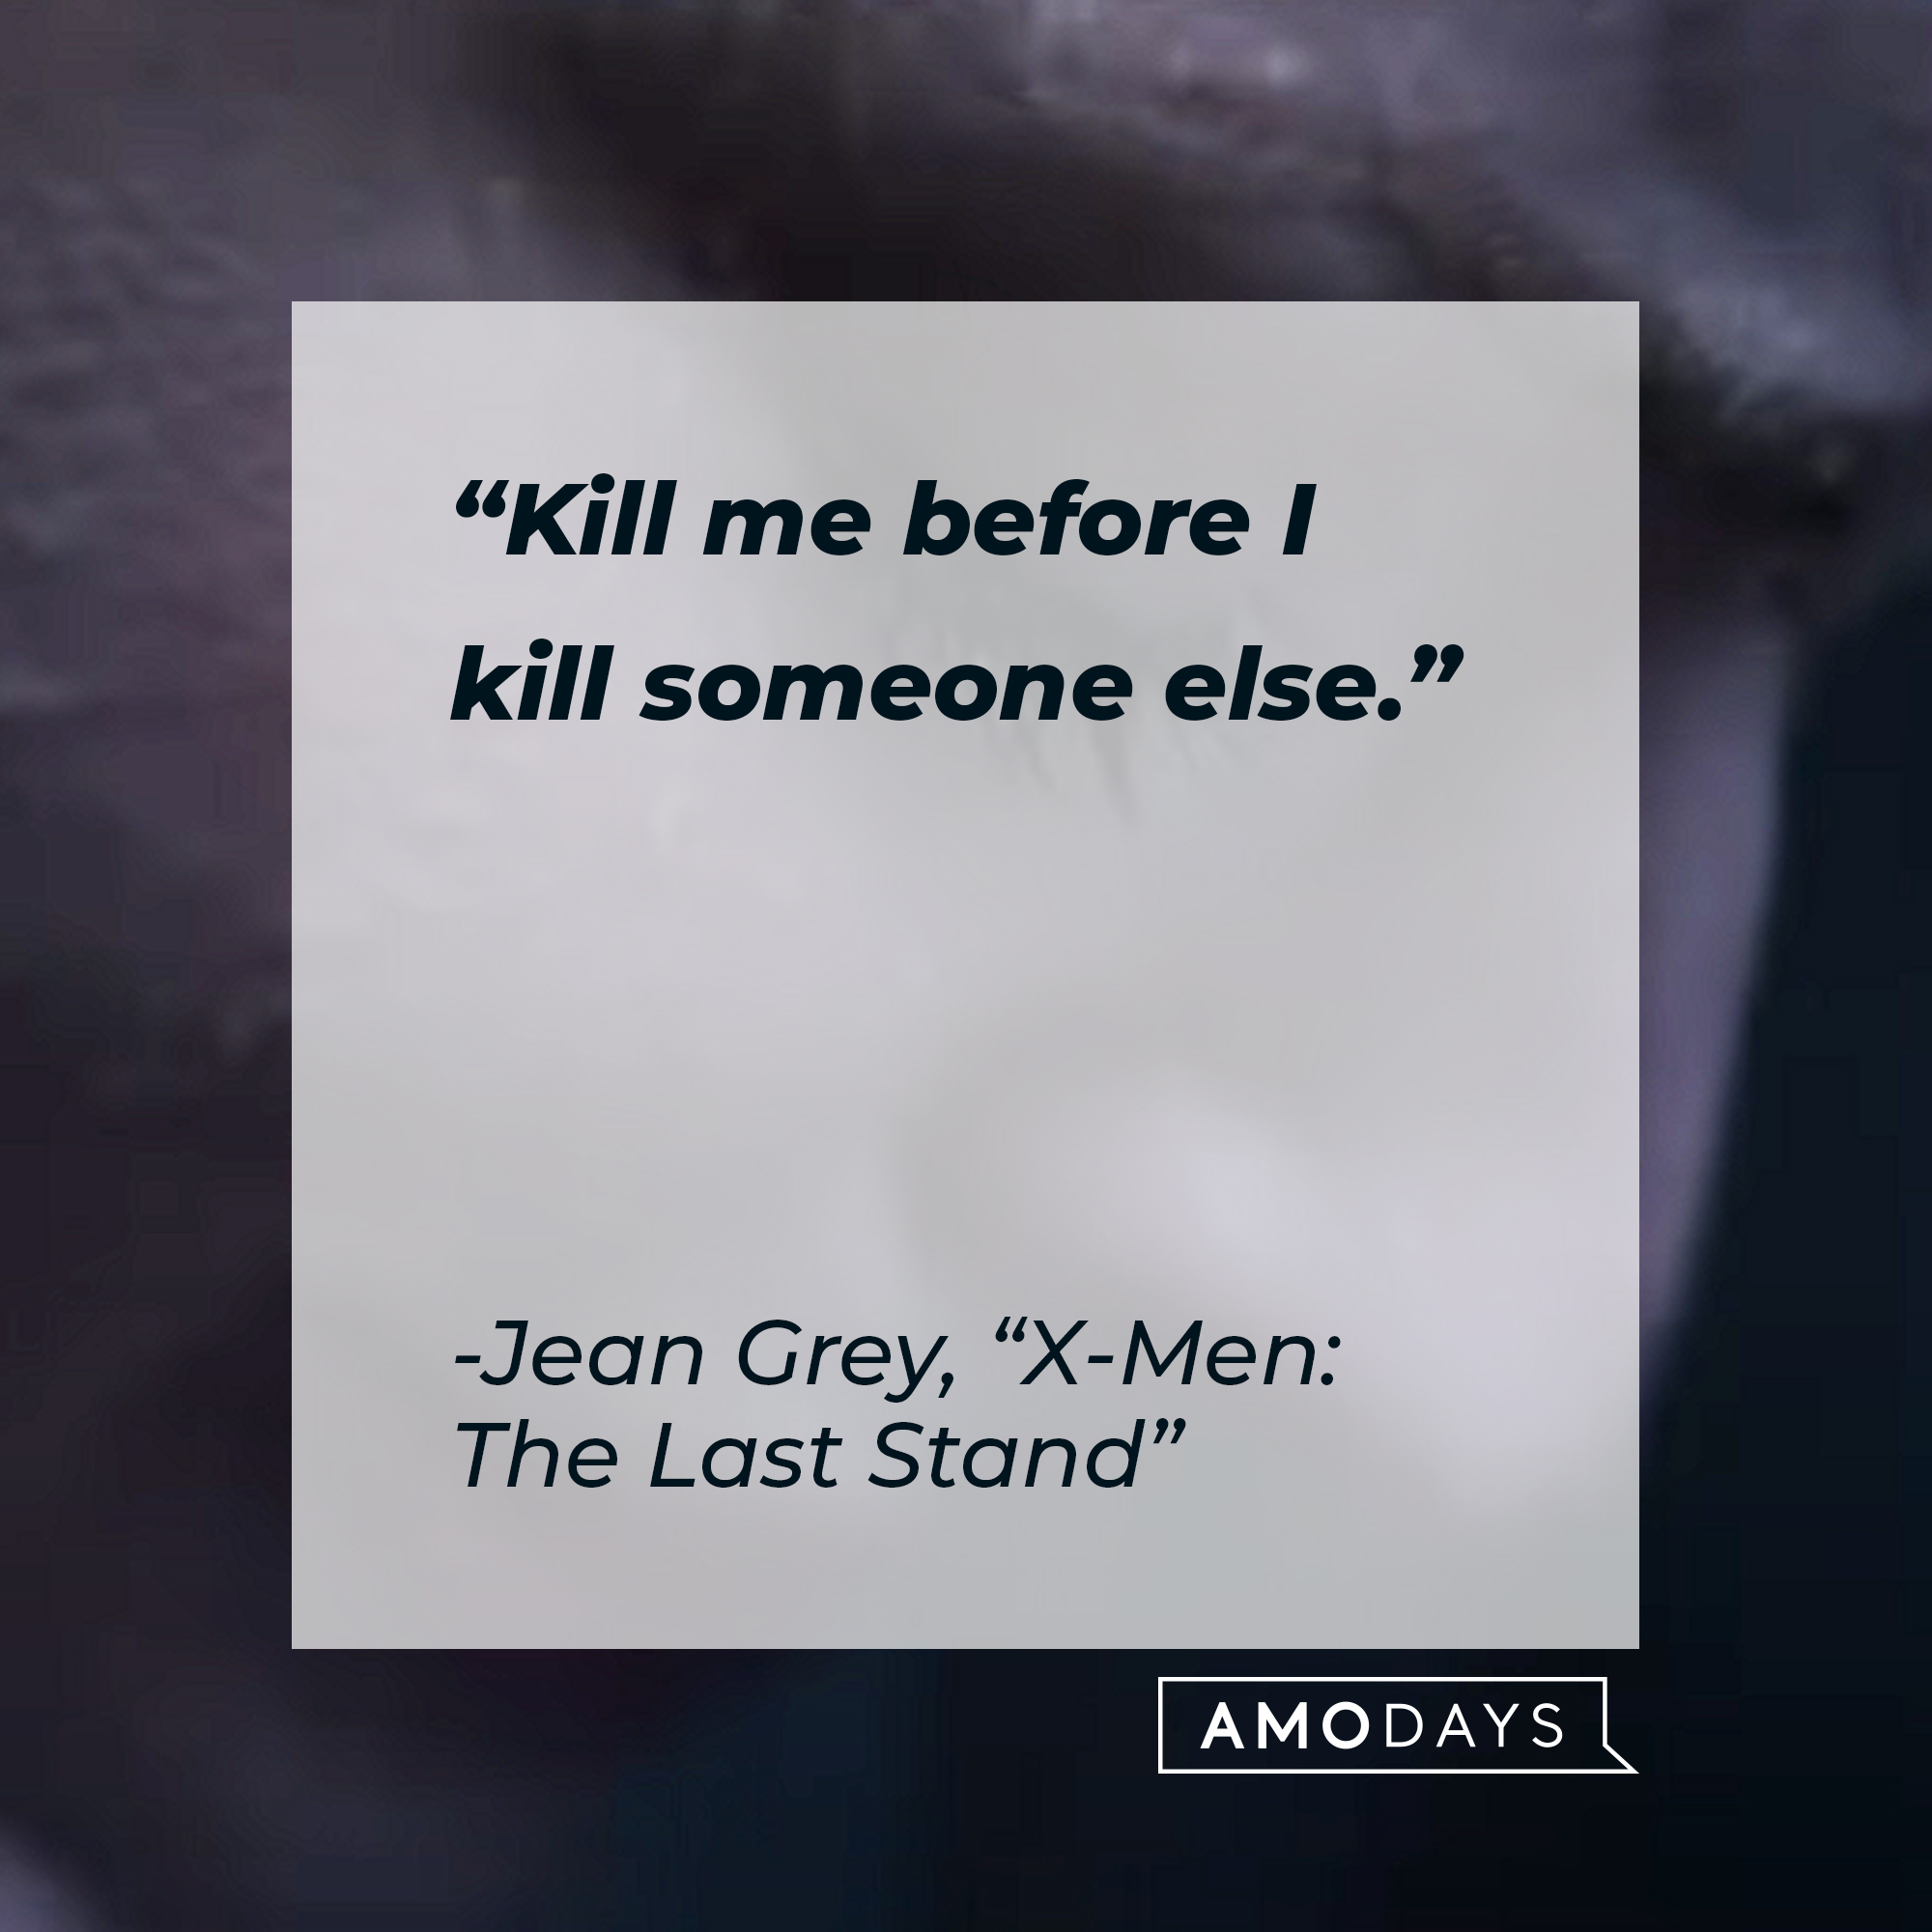 Jean Grey’s quote: "Kill me before I kill someone else." | Image: Youtube.com/20thCenturyStudios